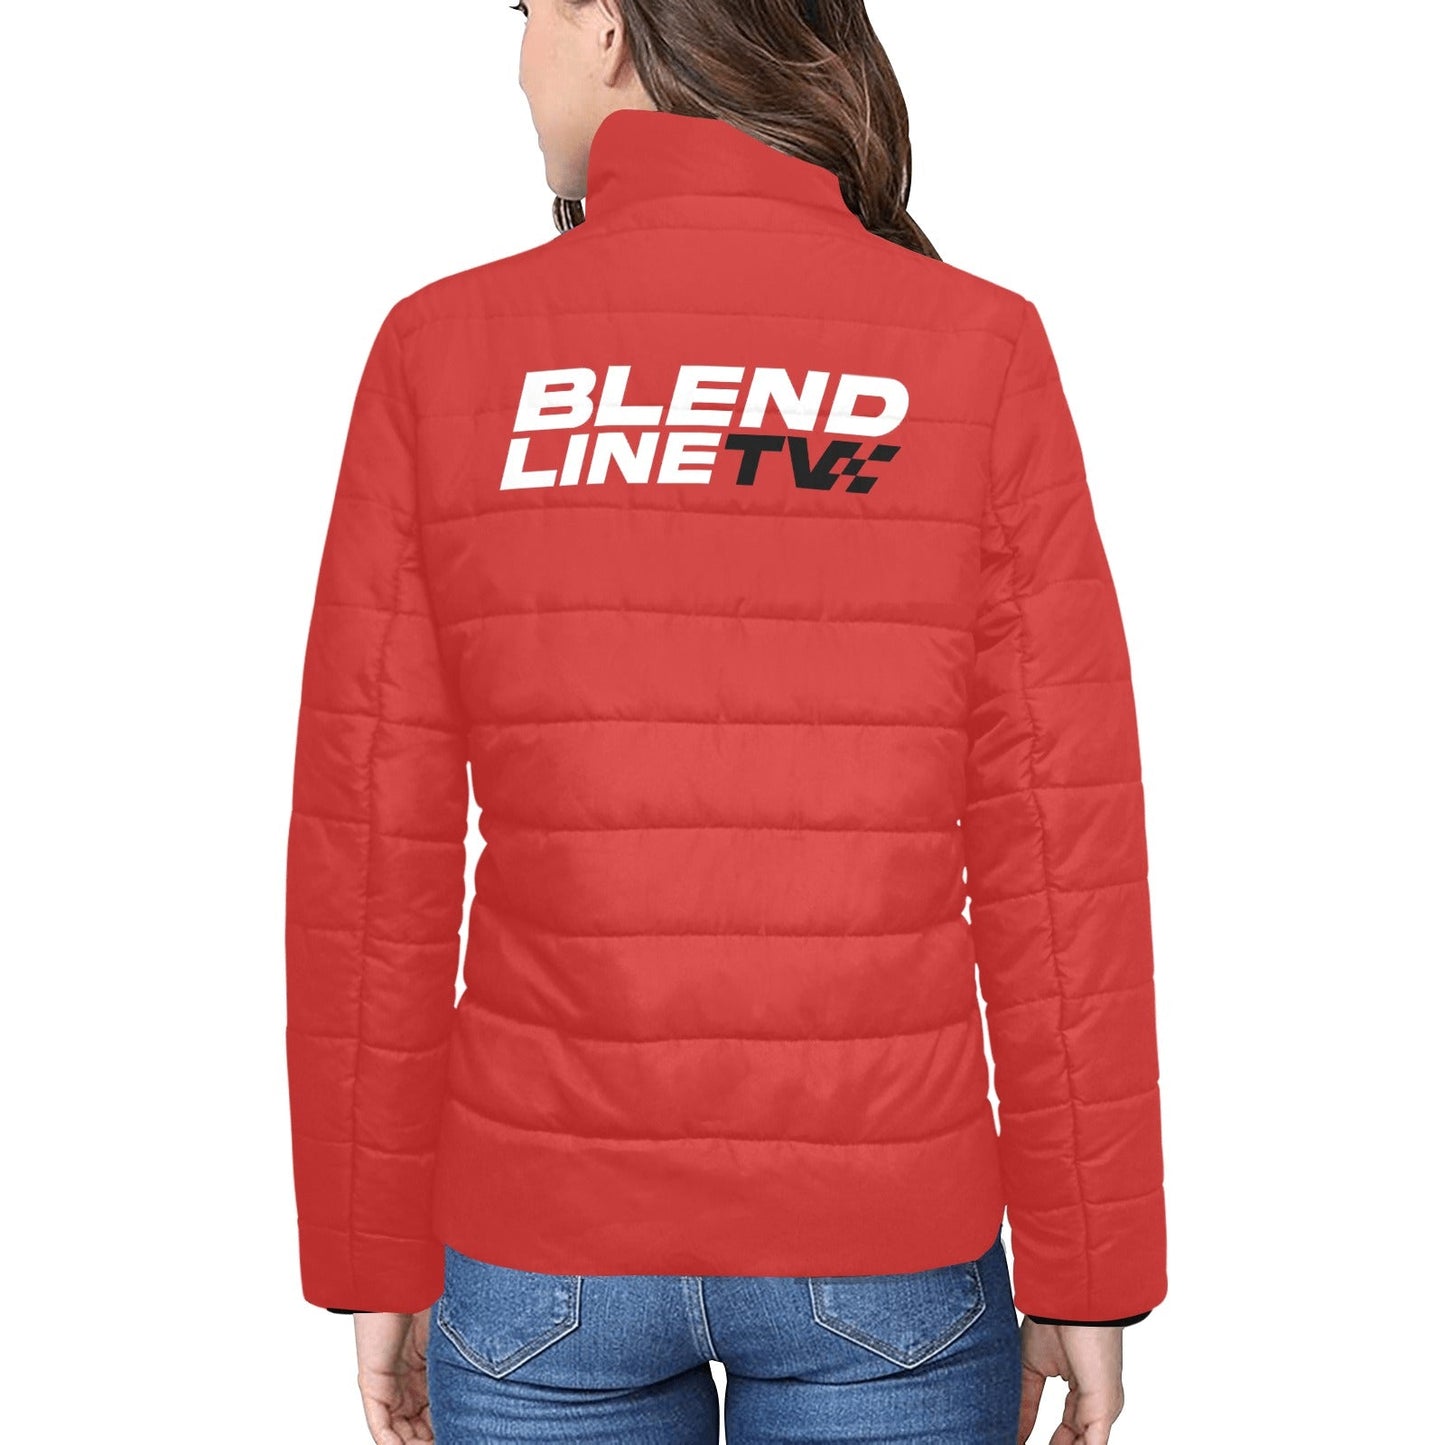 BLENDLINE TV womens puffer jacket - red